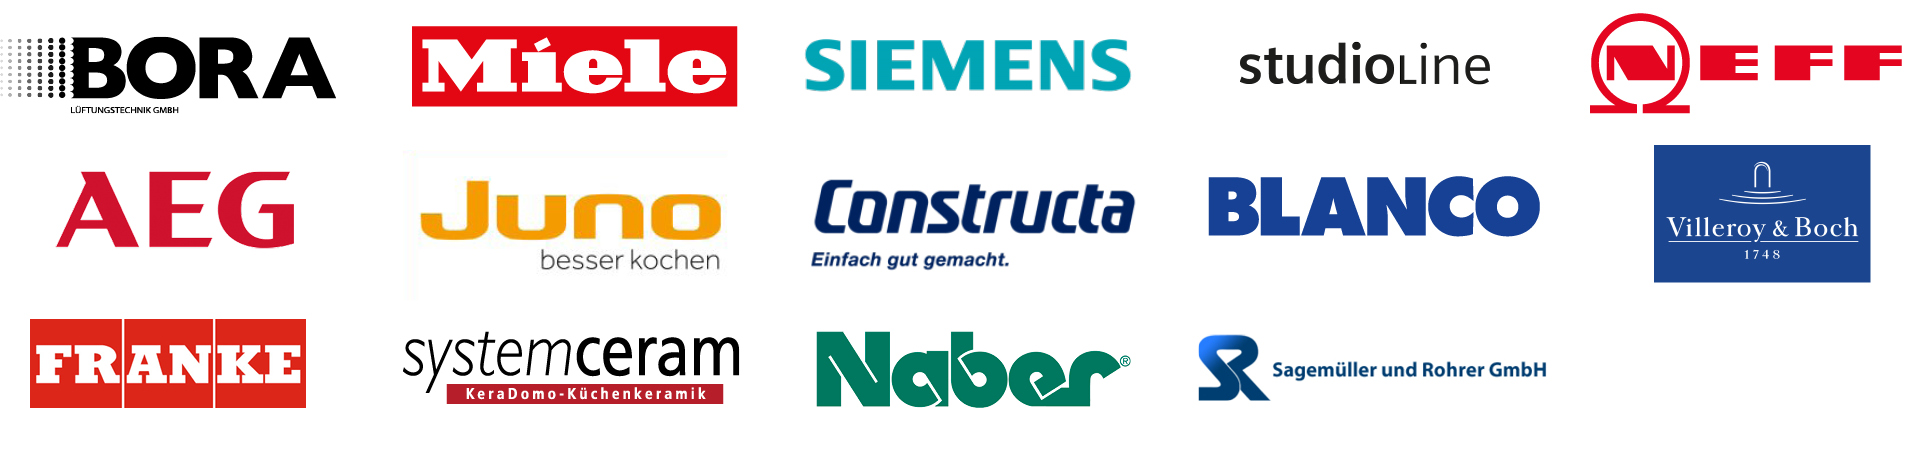 Logos, Küchengerätehersteller, Siemens, Miele, studioline, Franke, NEFF, BORA, Villeroy & Boch, AEG, JUNO, Blanco, Naber 